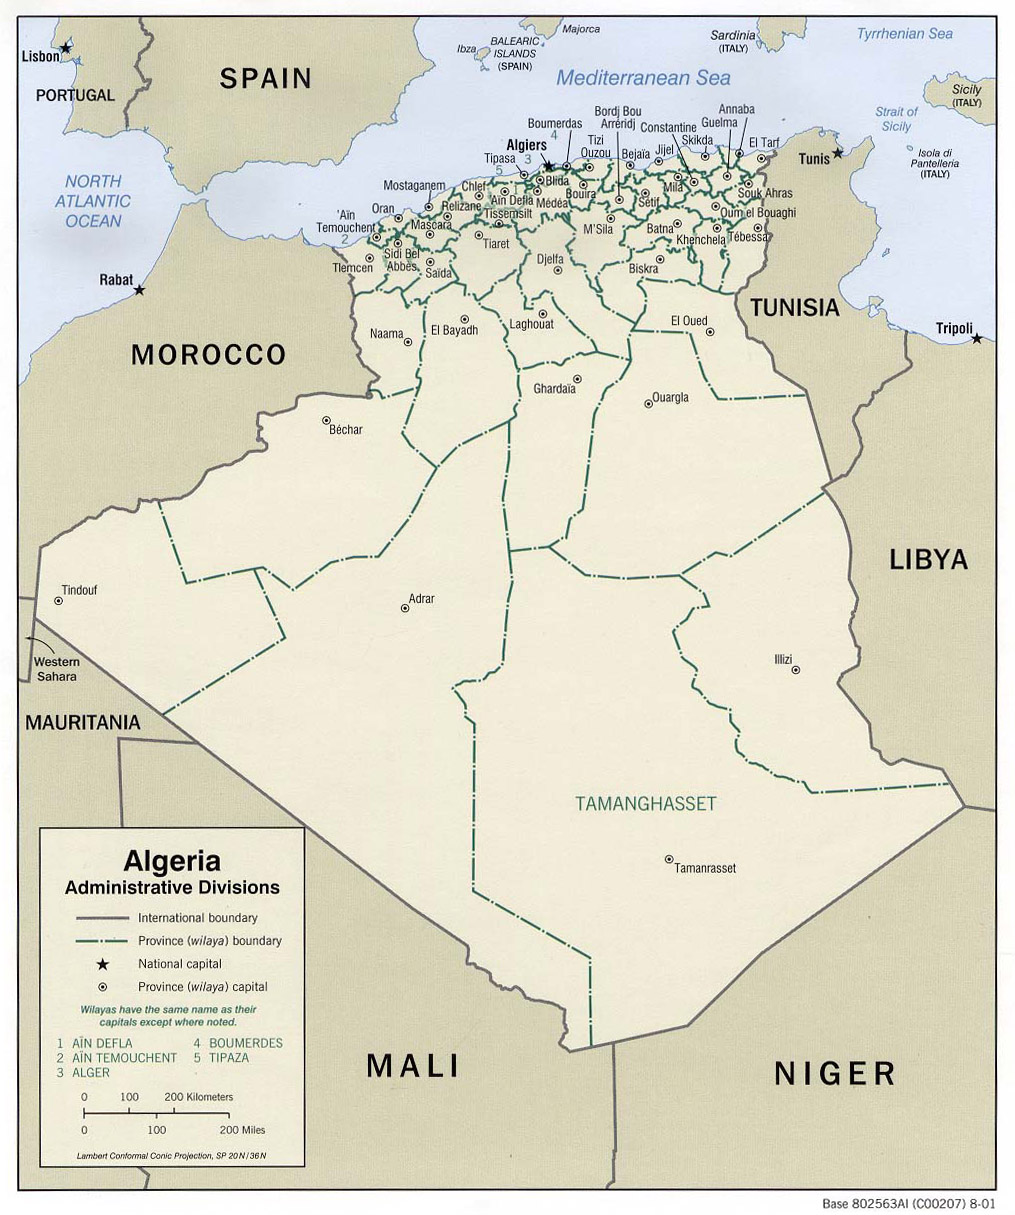 Detallado Mapa De Administrativas Divisiones De Argelia Hot Sex 12348 The Best Porn Website 6501